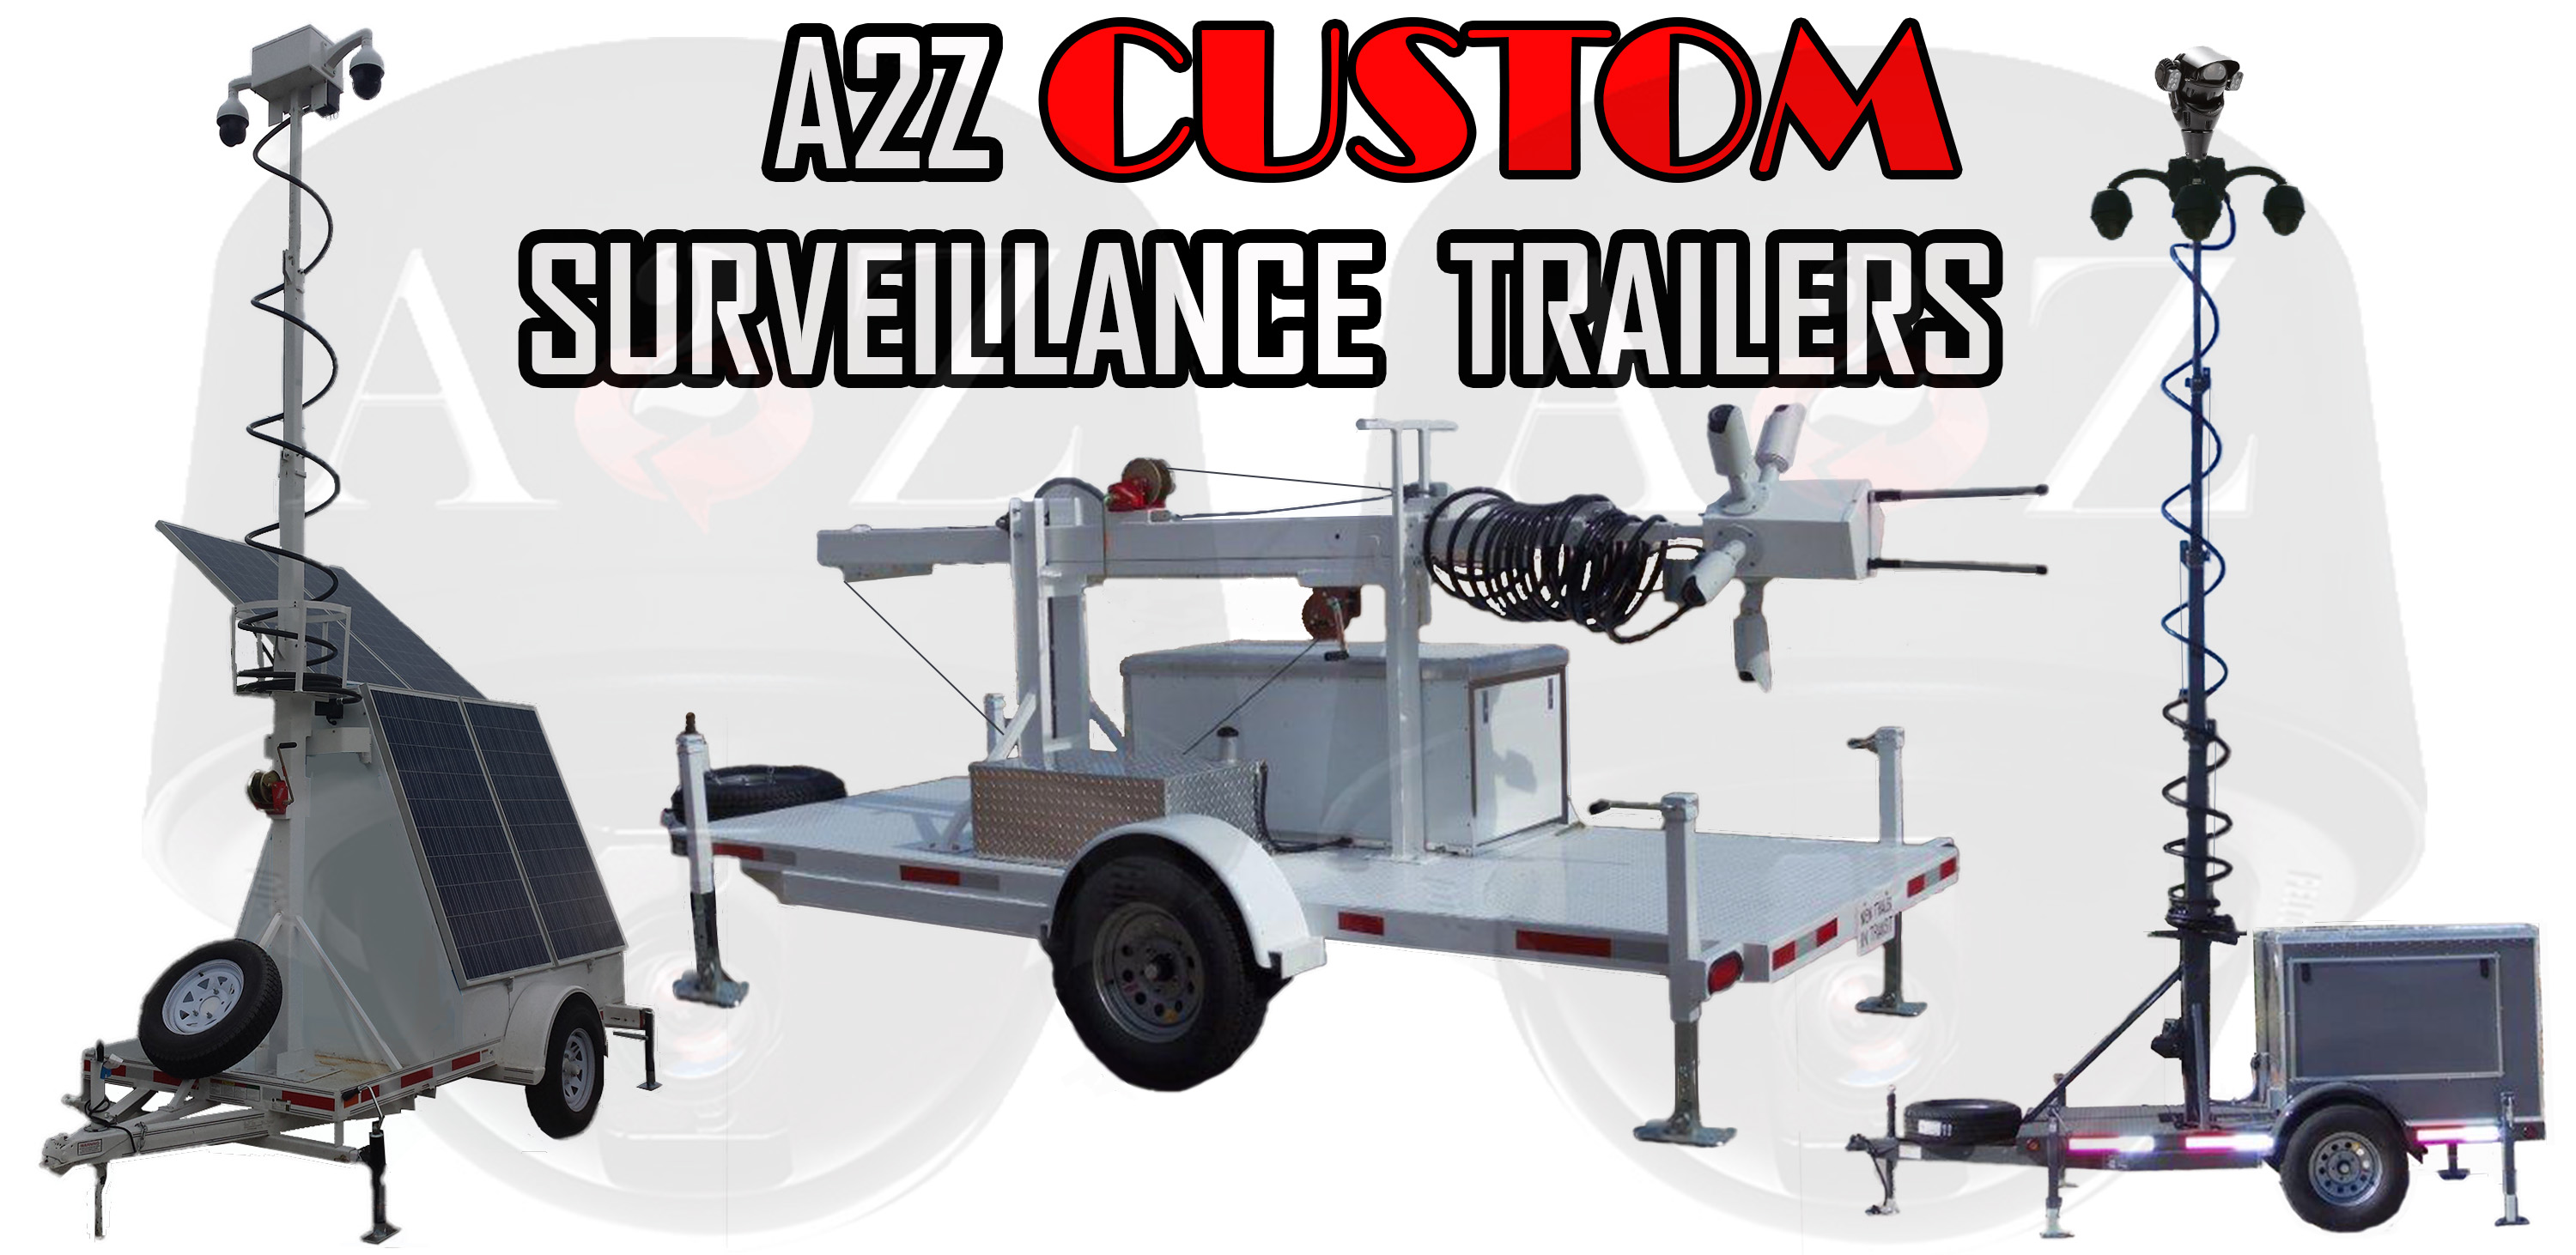 a2z-mmst-surveillance-trailers-custom-banner.jpg